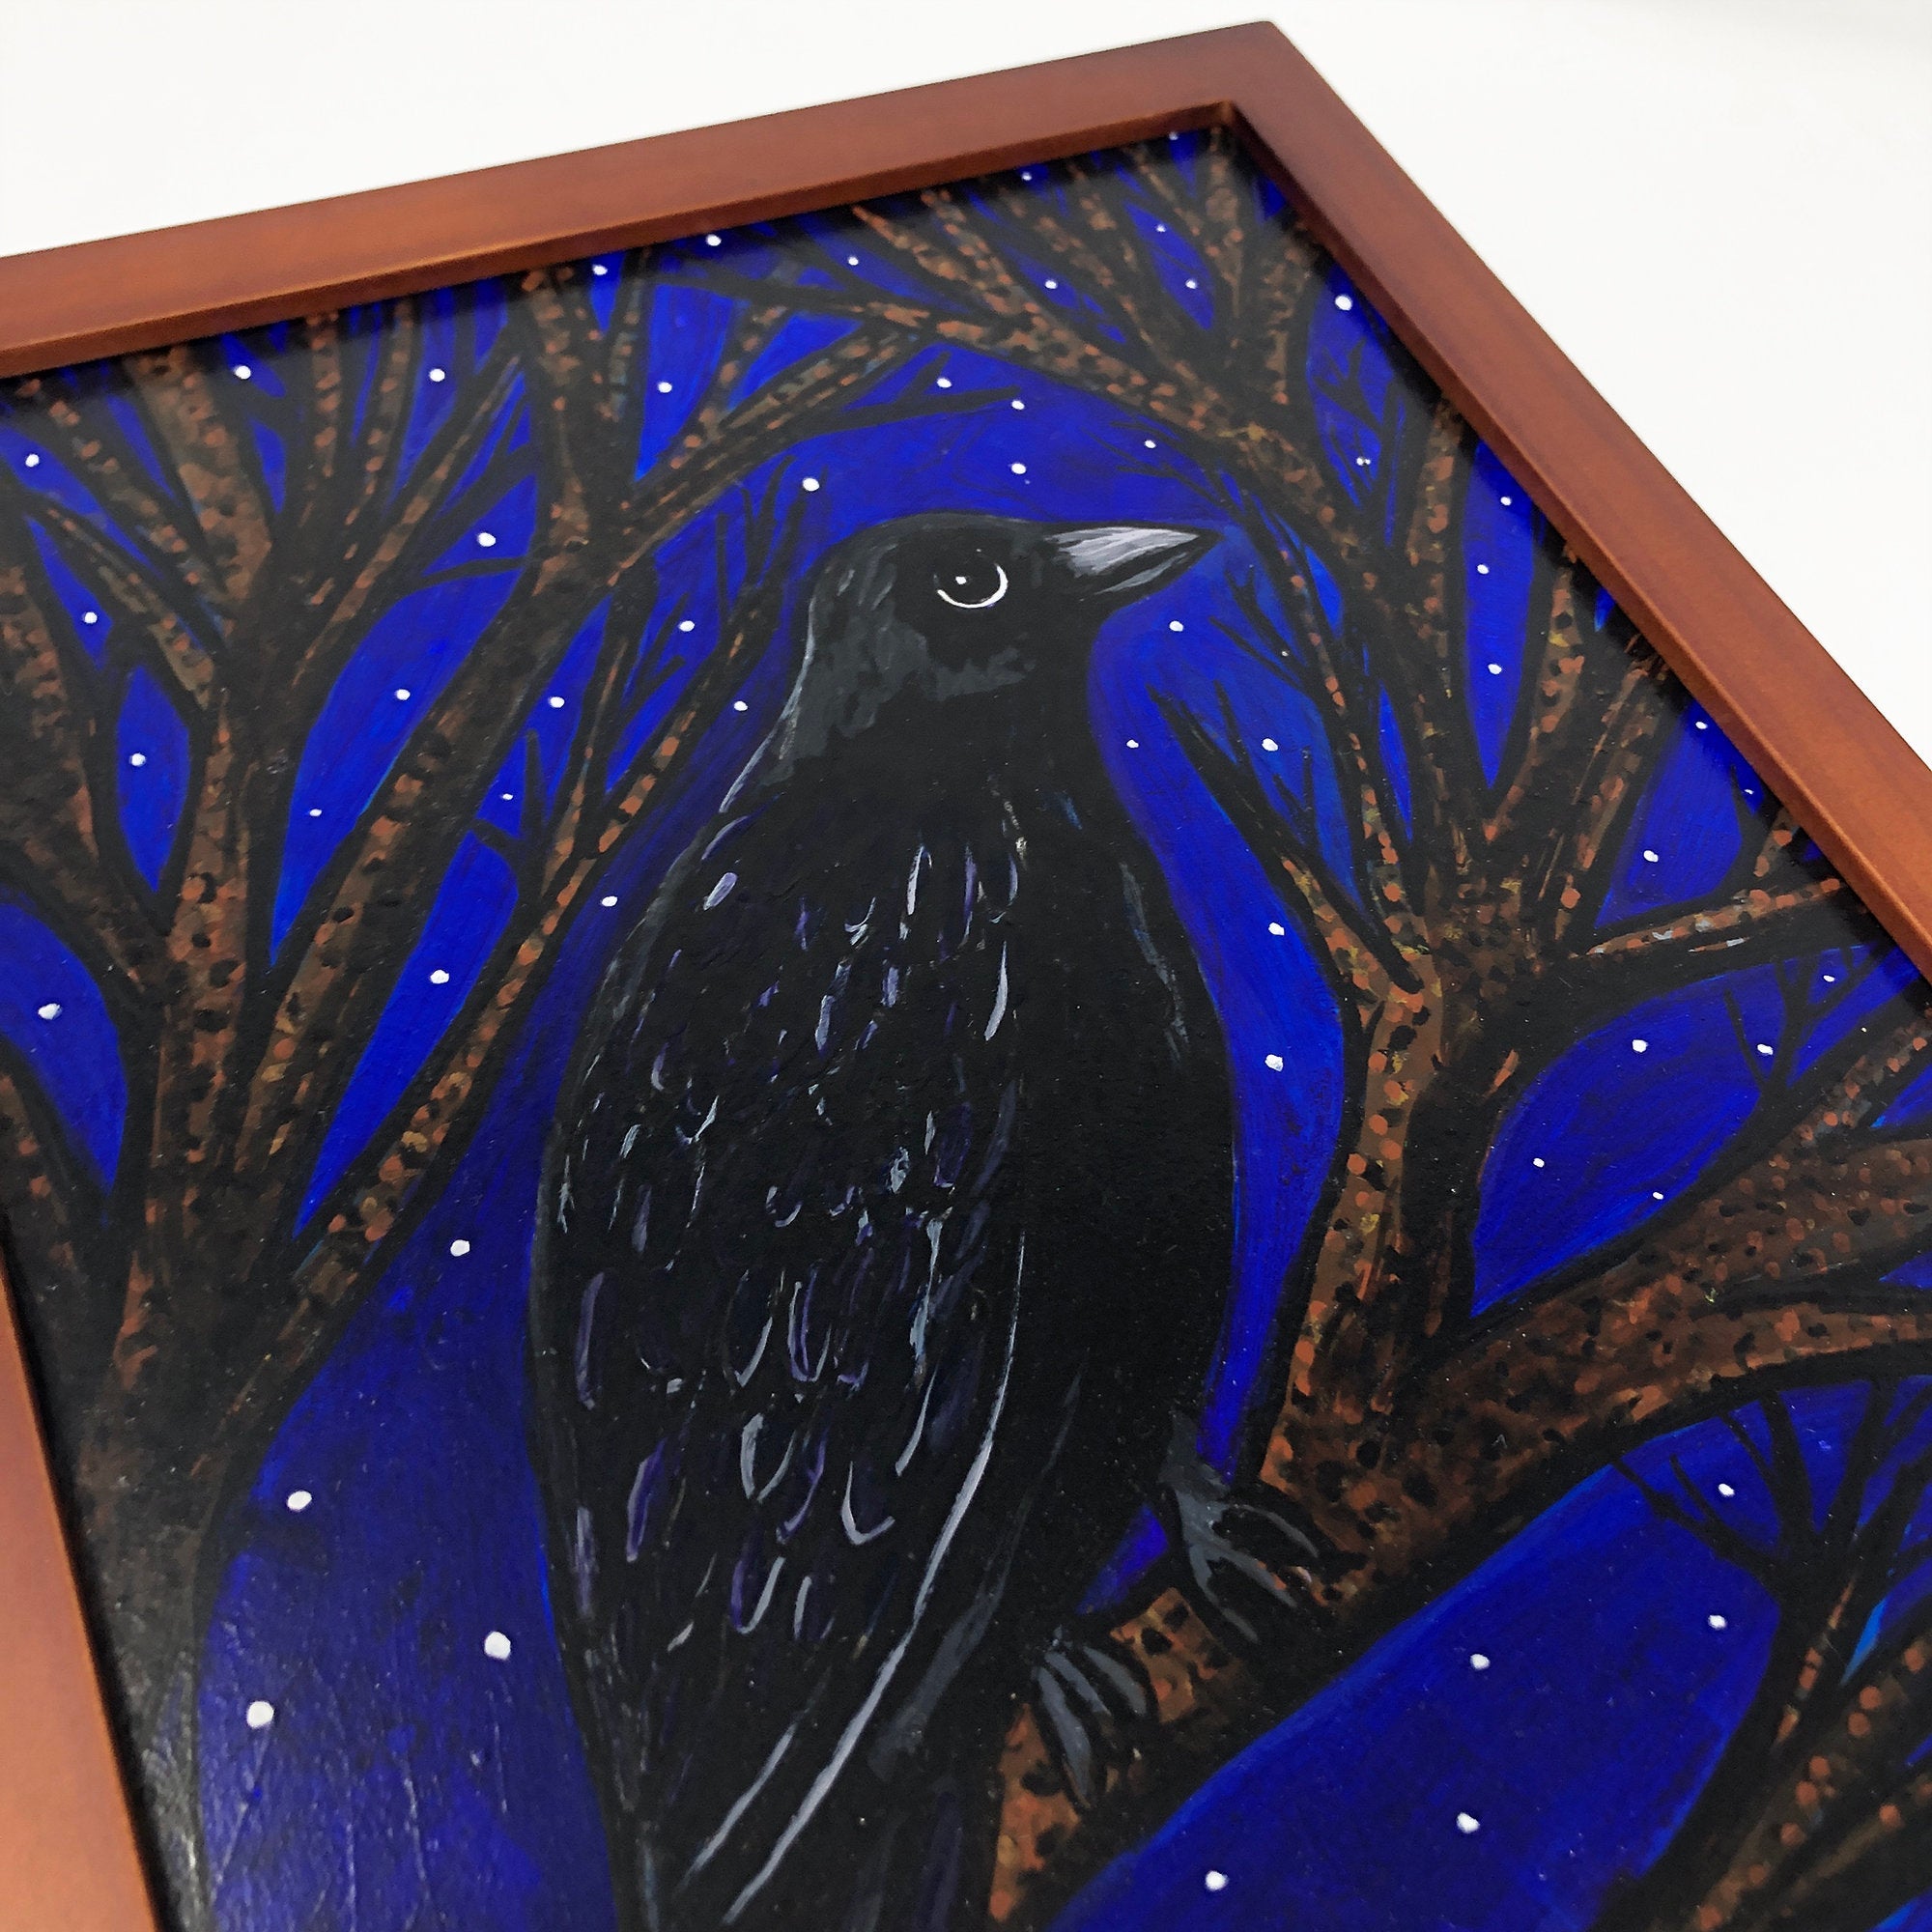 Raven Painting Original - Black Bird at Night Time with Stars Art - 9 x 12 Acrylic Painting - Raven Wall Decor